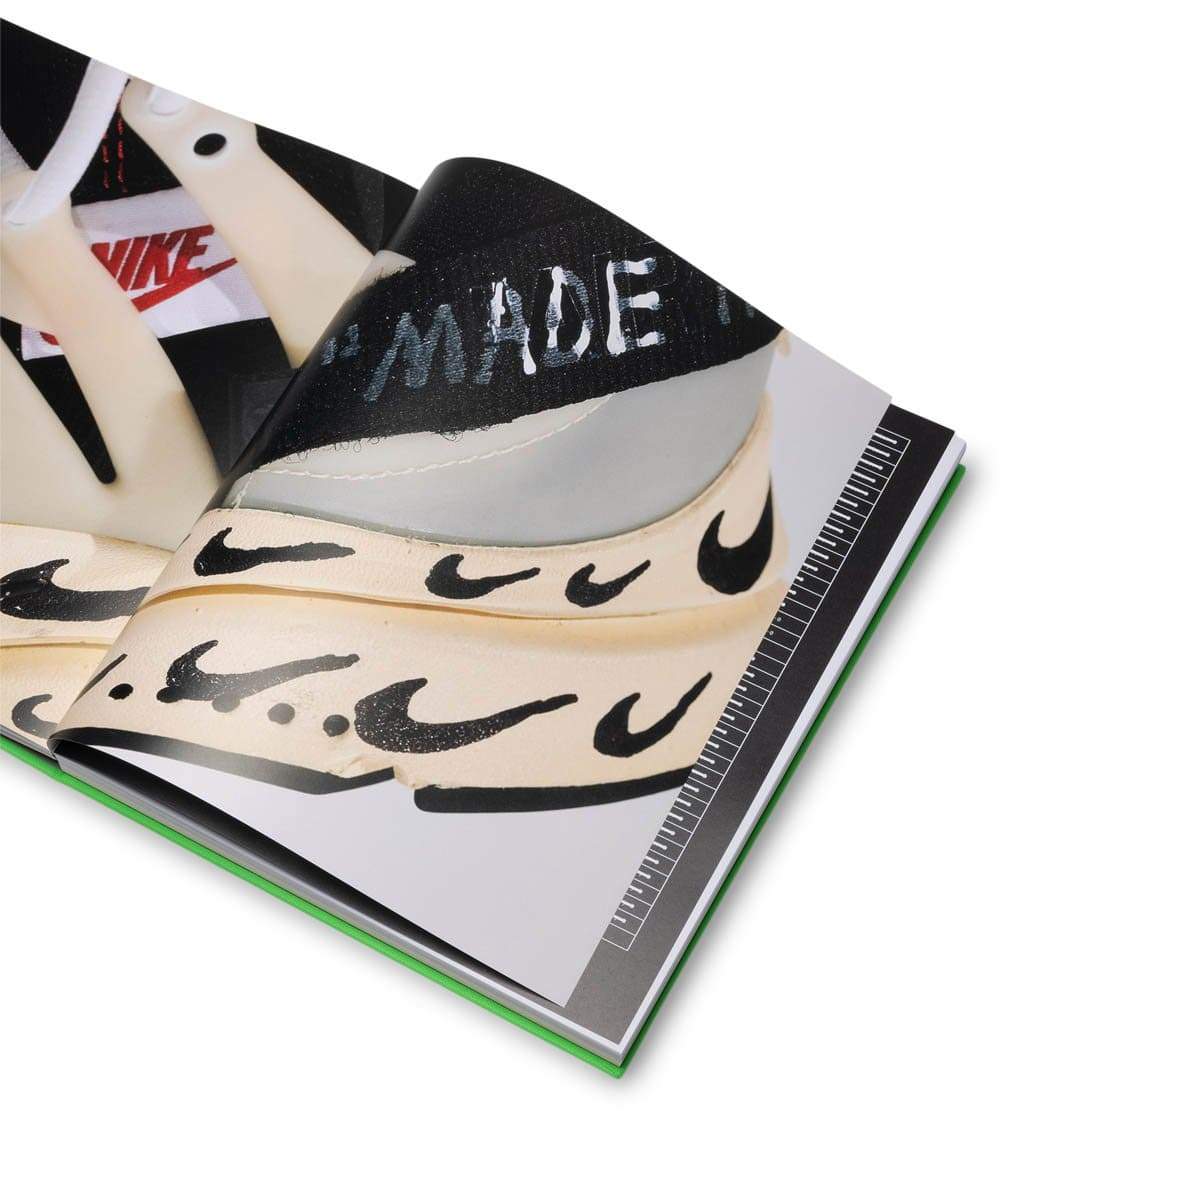 TASCHEN Virgil Abloh Nike Icons Hardcover Book – Kith